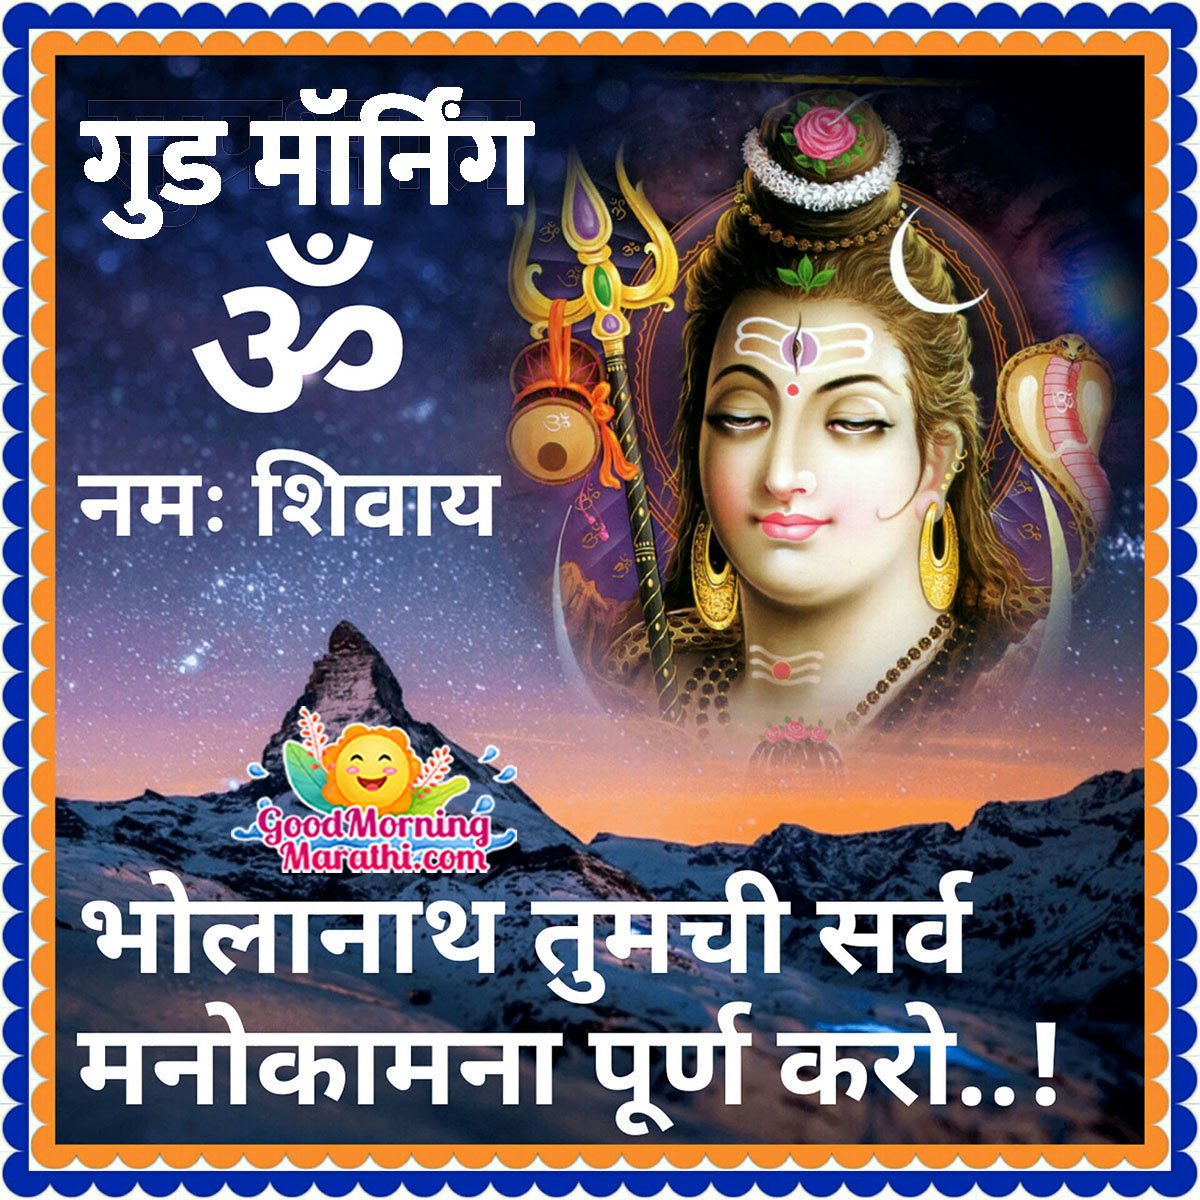 Good Morning Bholenath Wish In Marathi